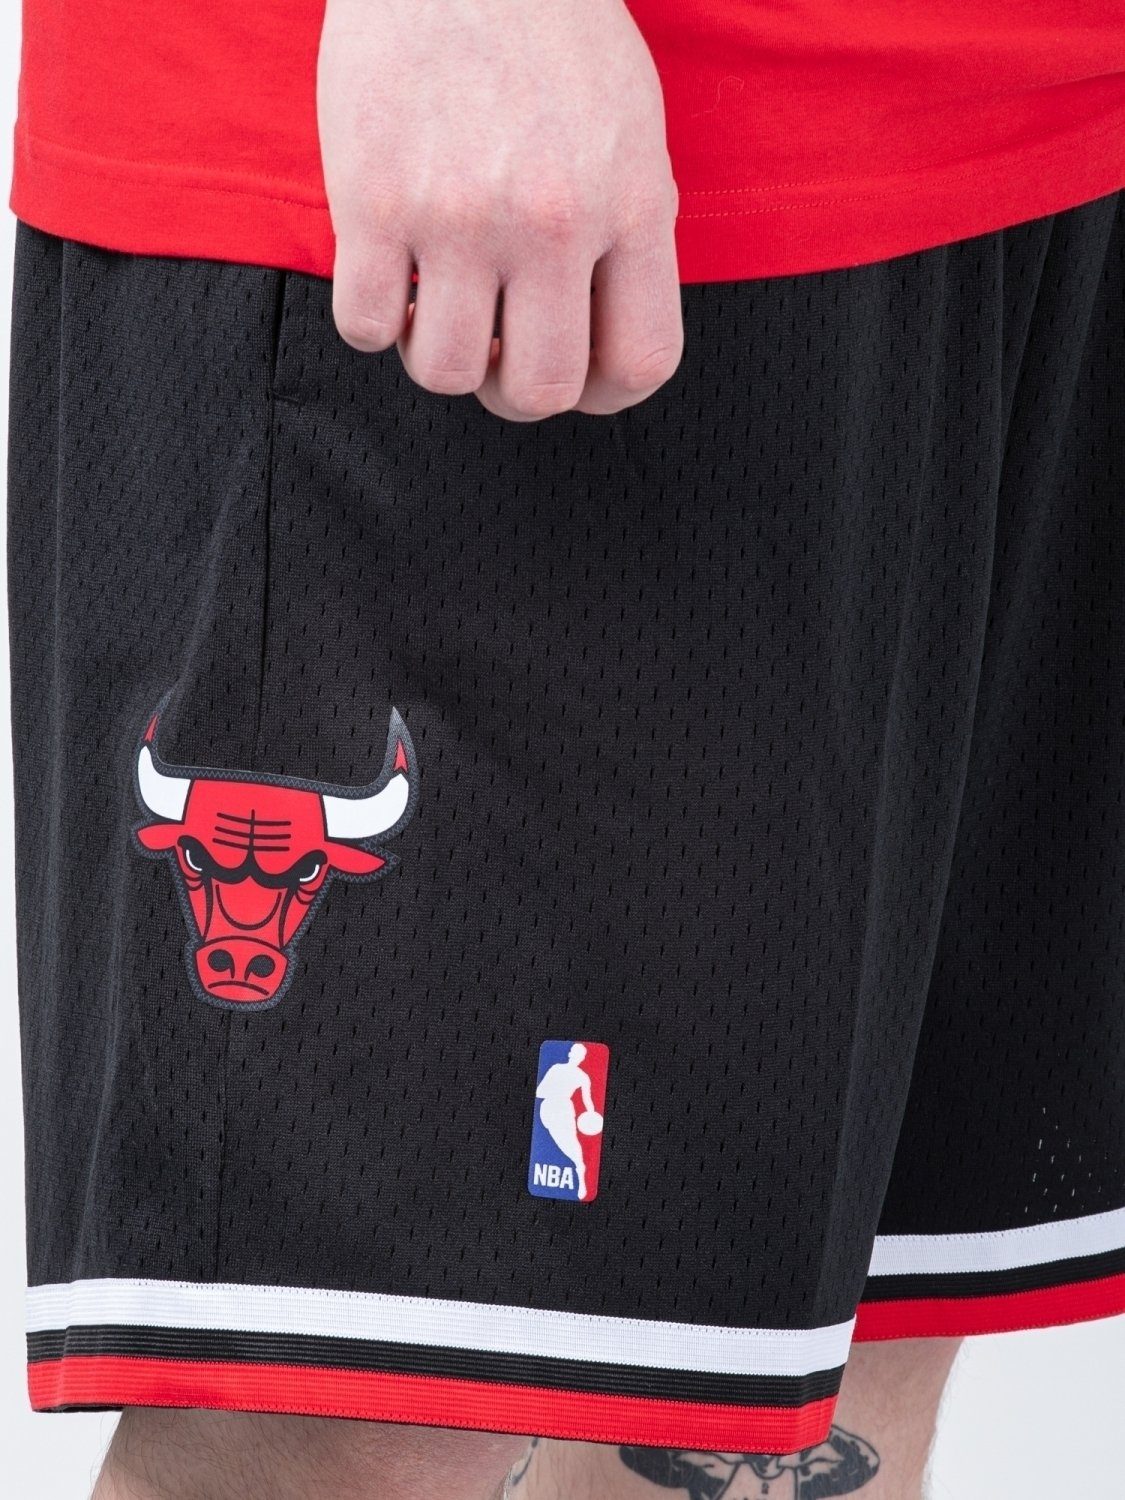 & Mitchell Mitchell Shorts Ness Ness Swingman NBA Bulls & Funktionsshorts Chicago